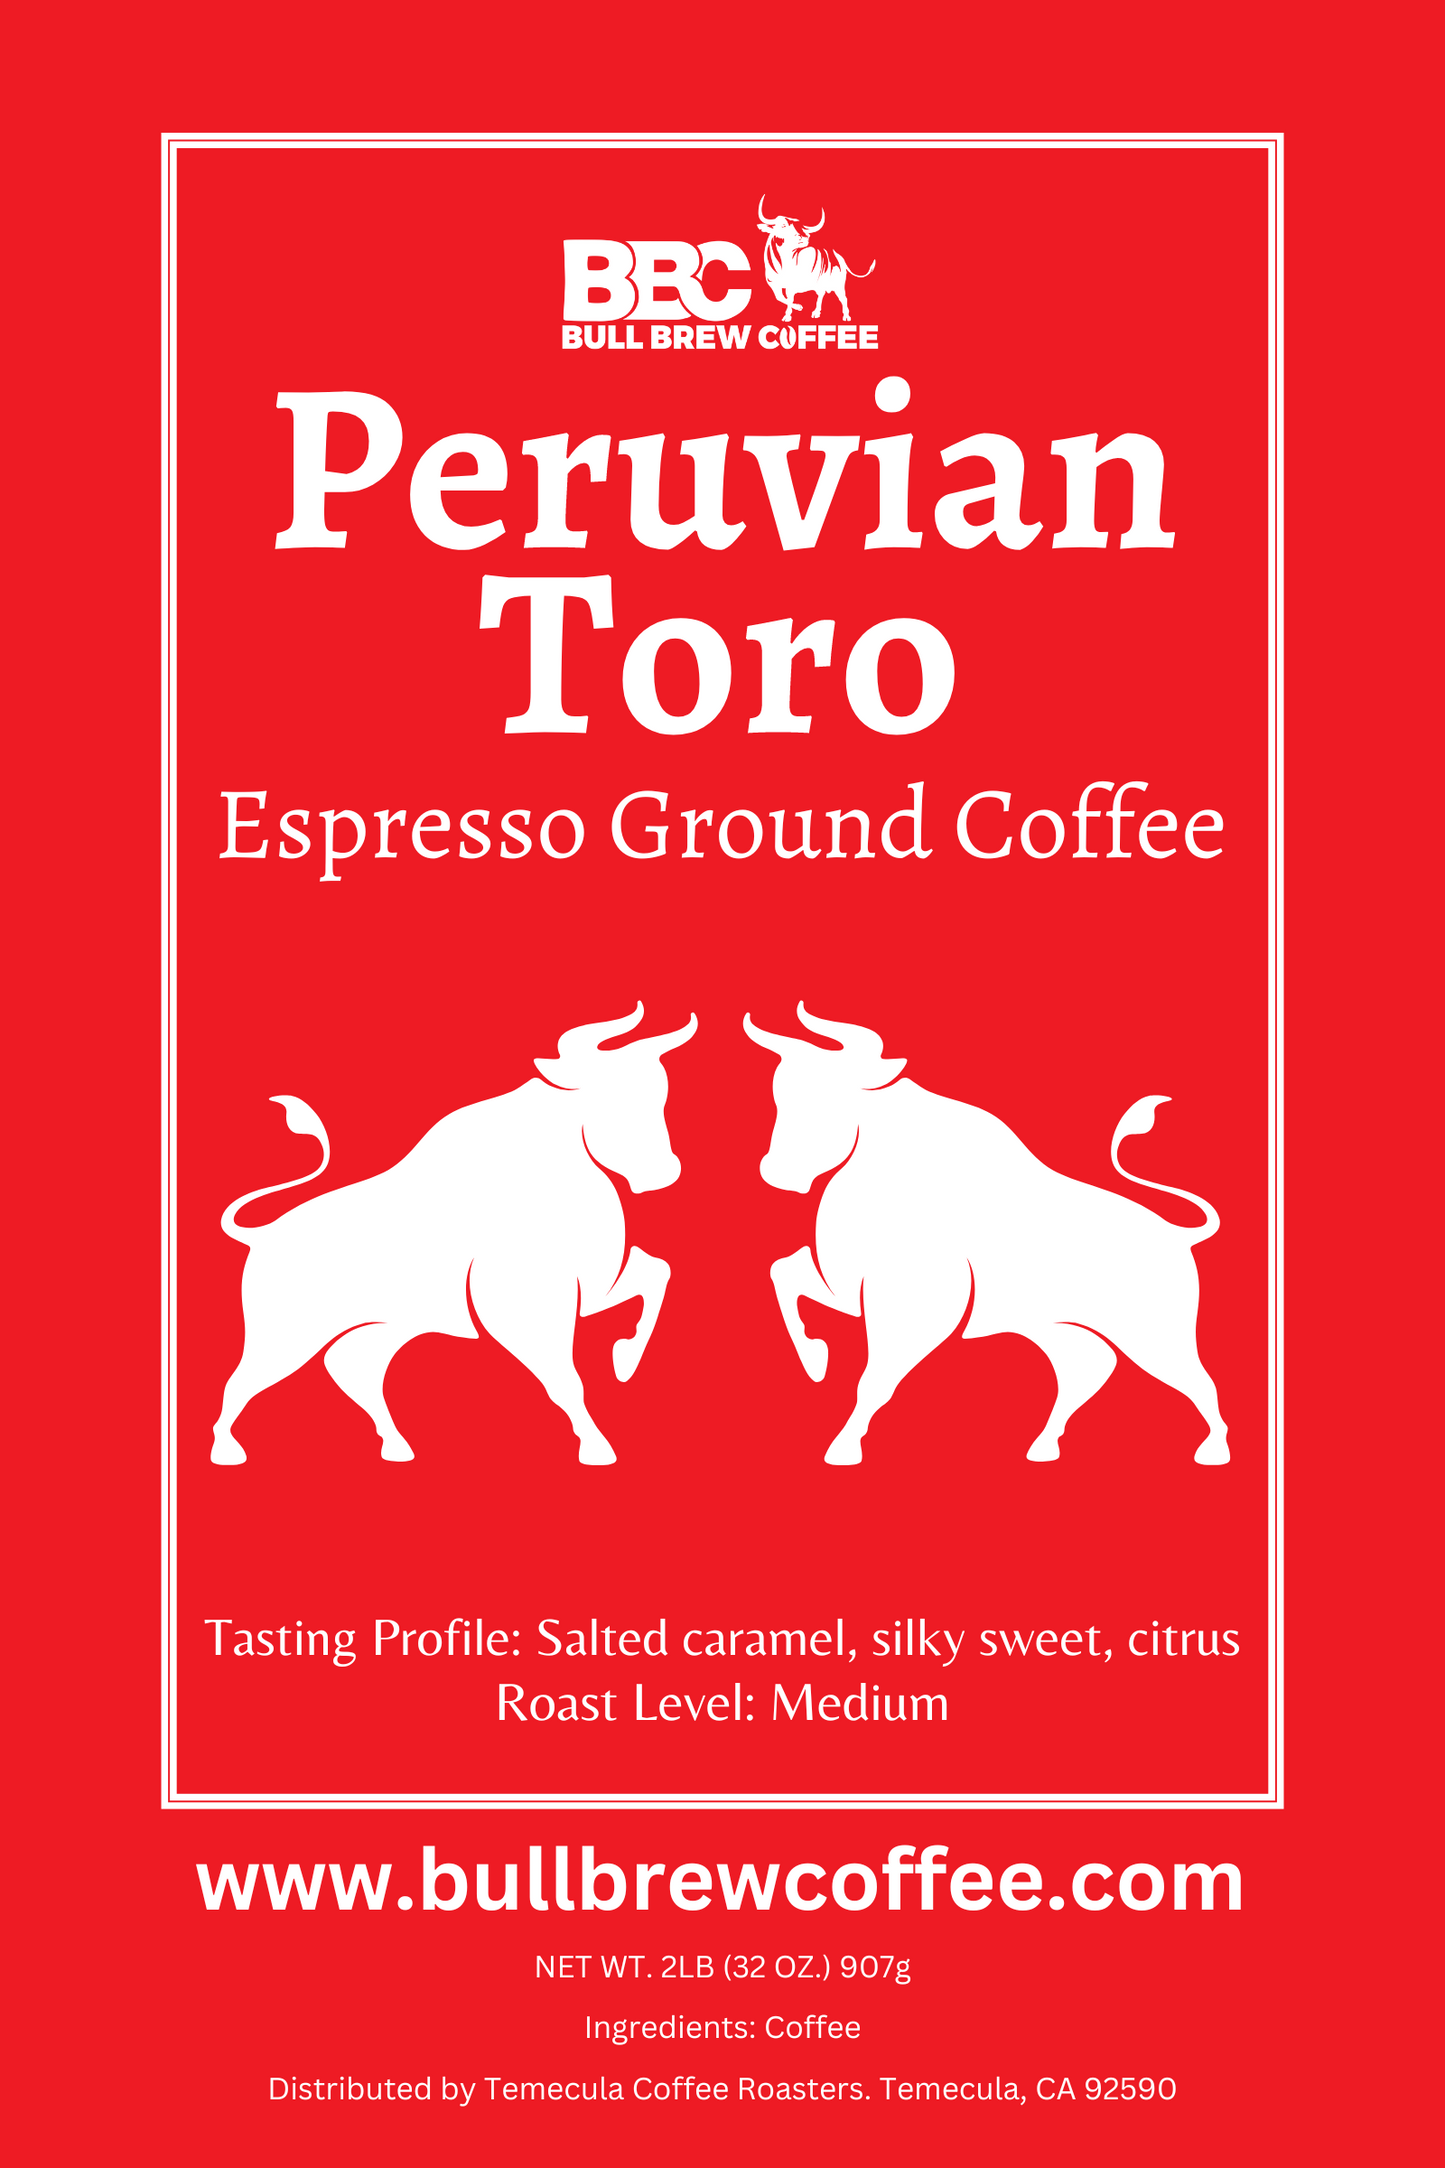 Peruvian Toro Coffee